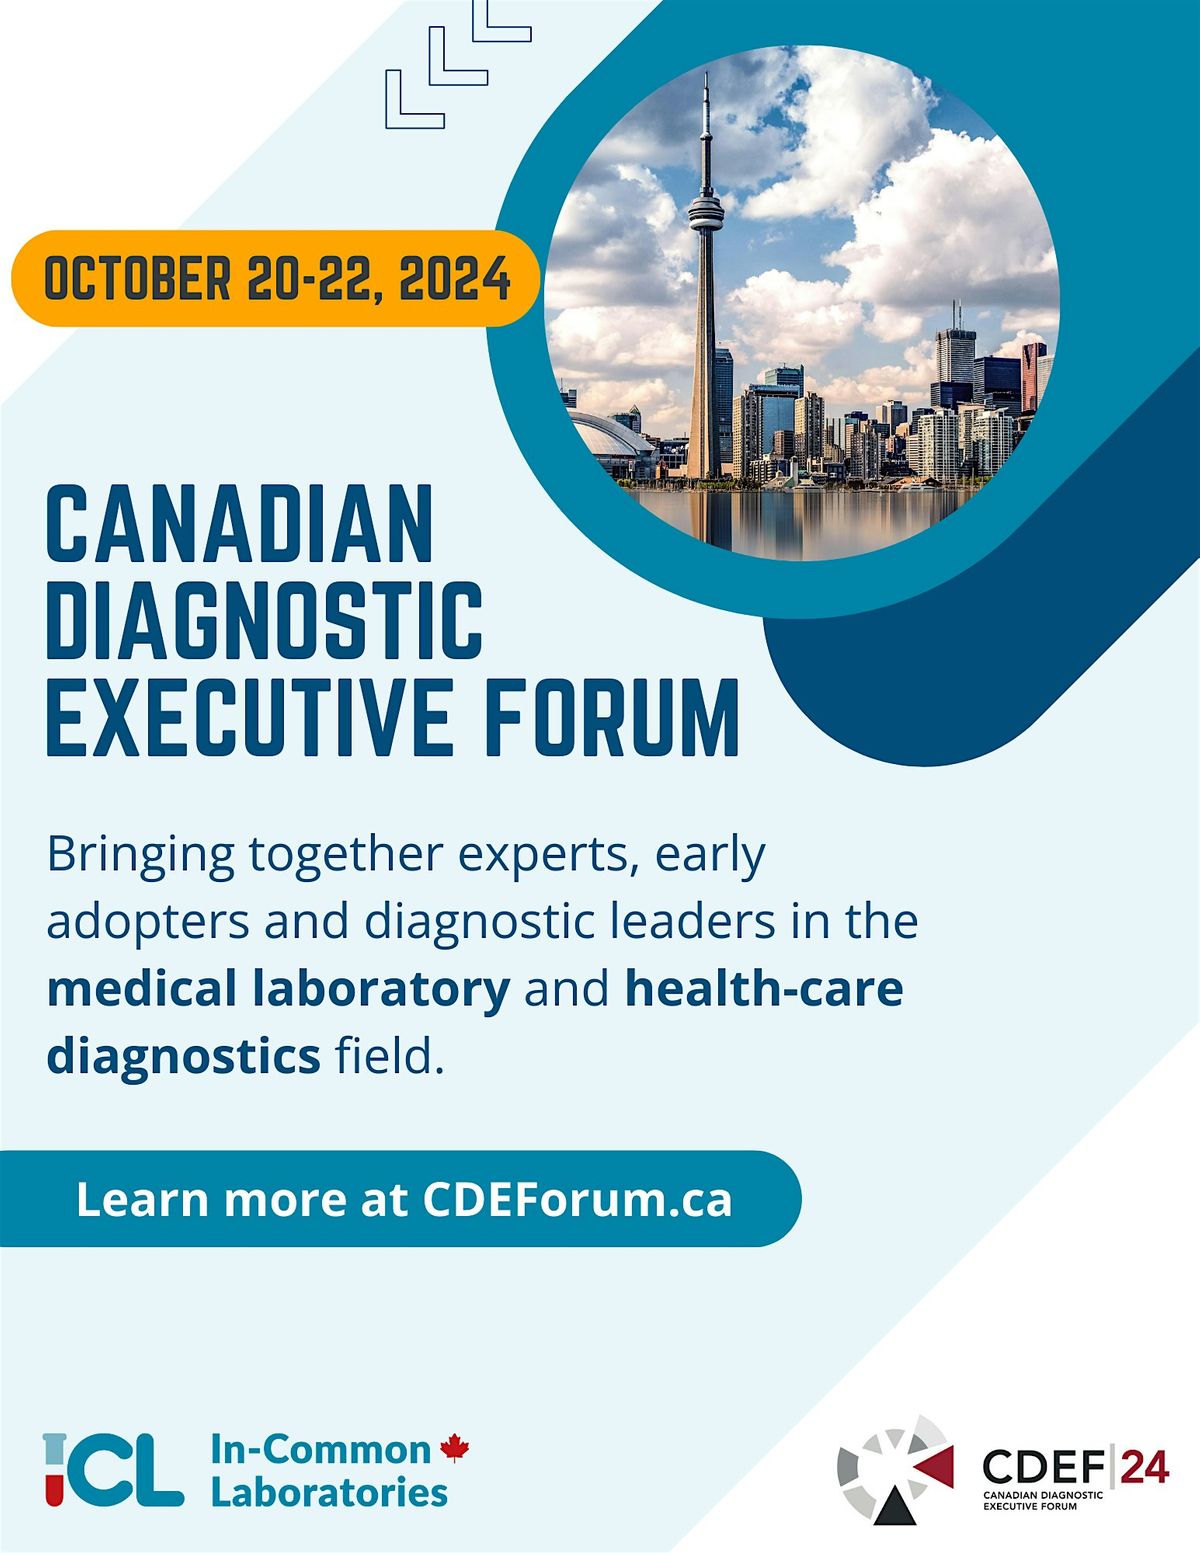 Canadian Diagnostic Executive Forum - October 20-22, 2024